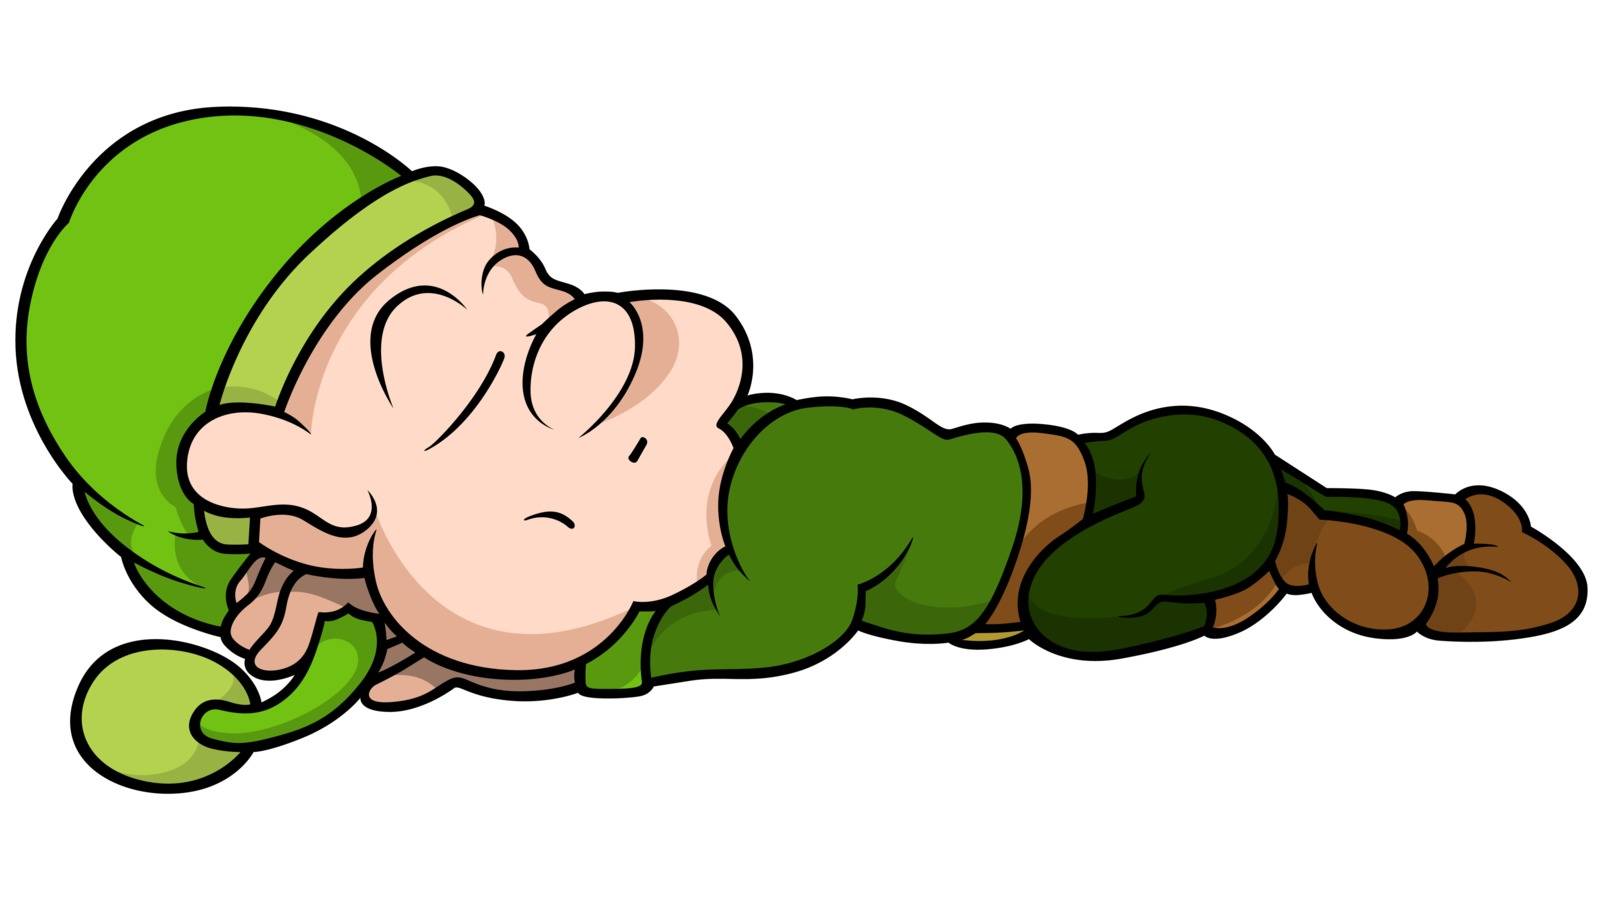 Green Dwarf Sleeping - Colored Cartoon Illustration, Vector